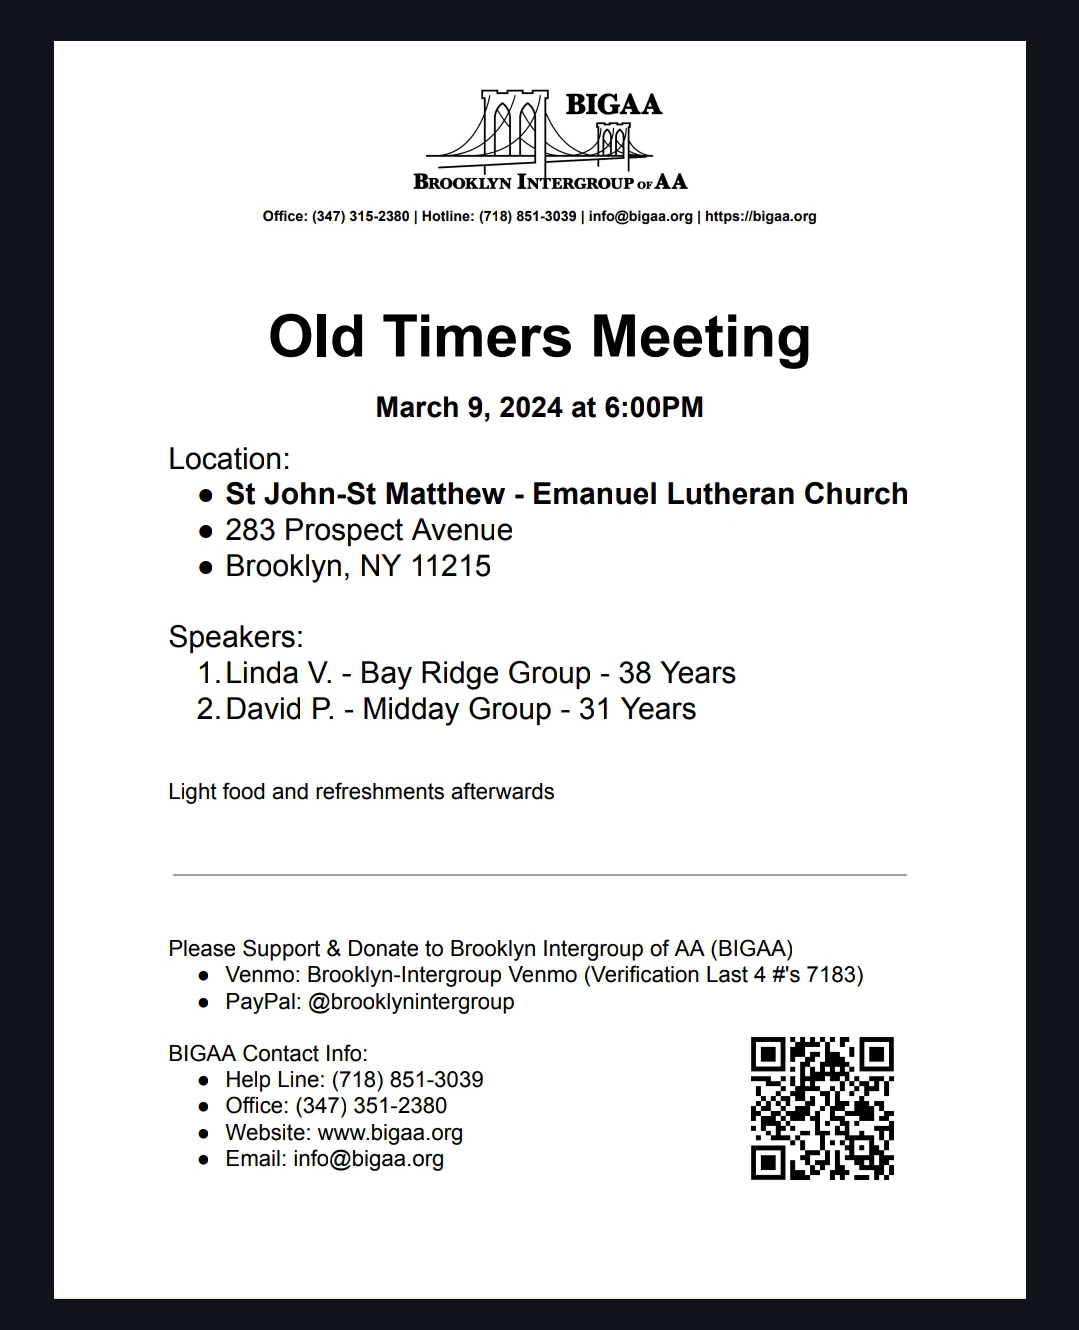 Old Timers Meeting @ St John-St Matthew - Emanuel Lutheran Church